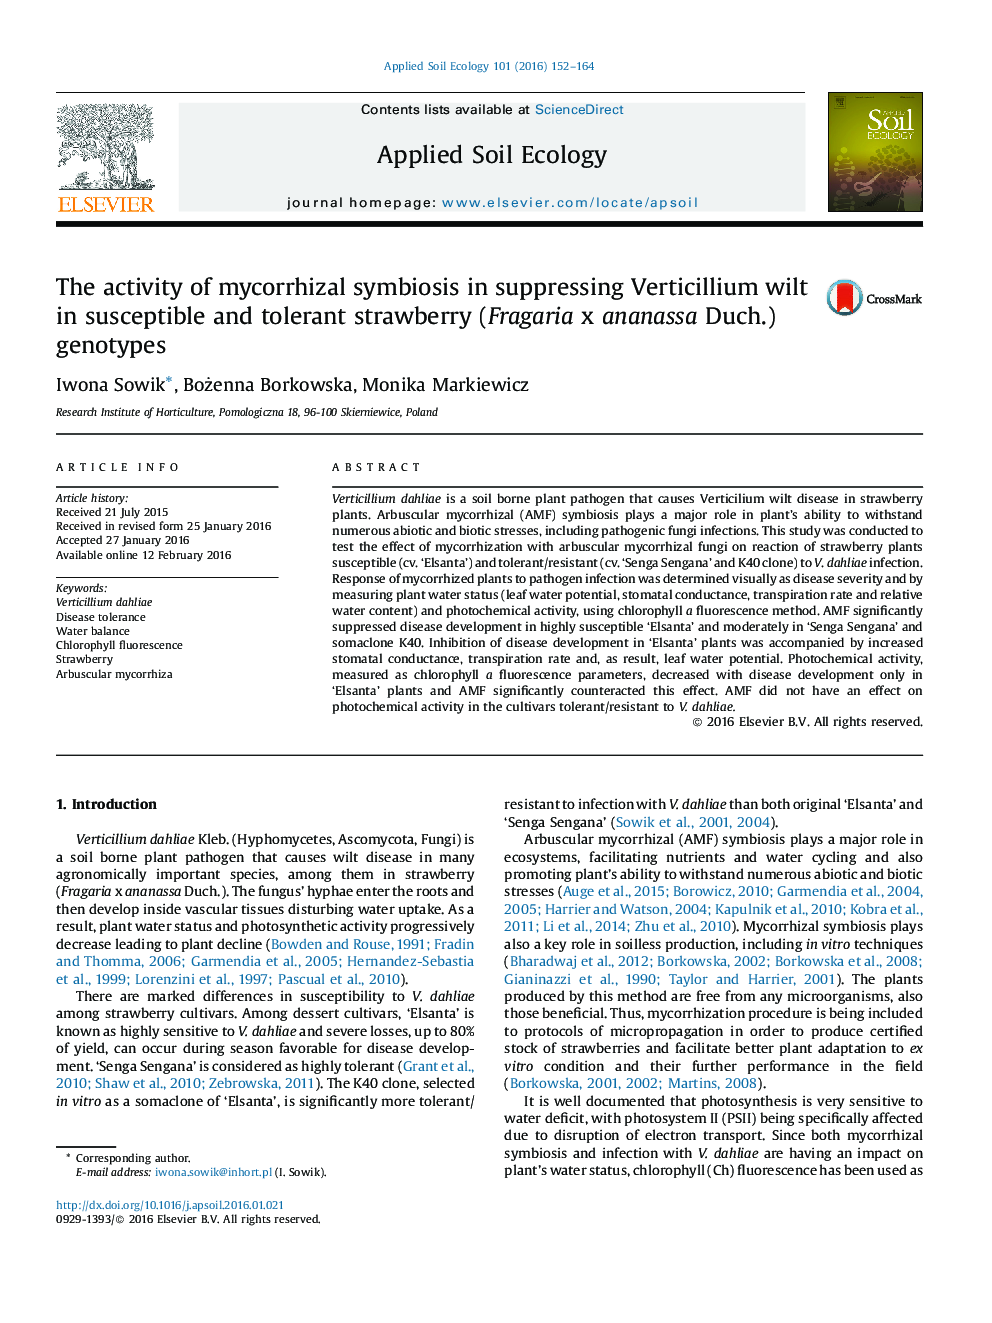 The activity of mycorrhizal symbiosis in suppressing Verticillium wilt in susceptible and tolerant strawberry (Fragaria x ananassa Duch.) genotypes